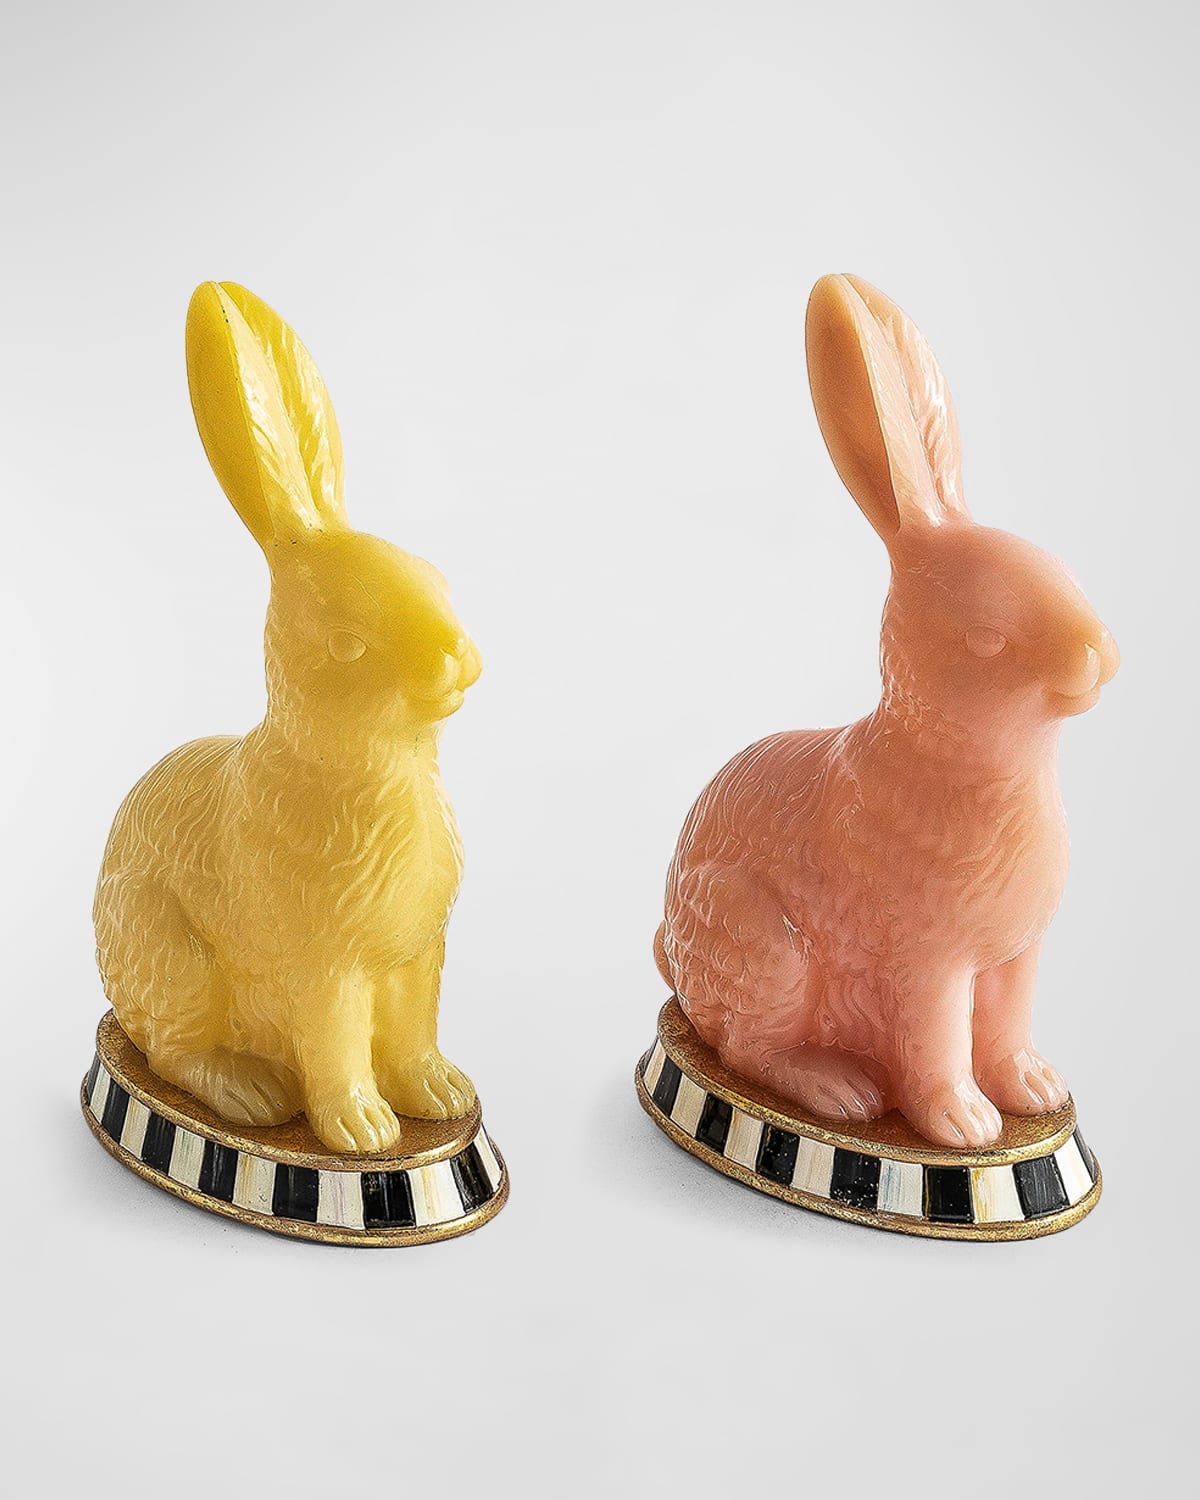 Mackenzie-childs Rabbit Figurines, Set Of Two In Multi